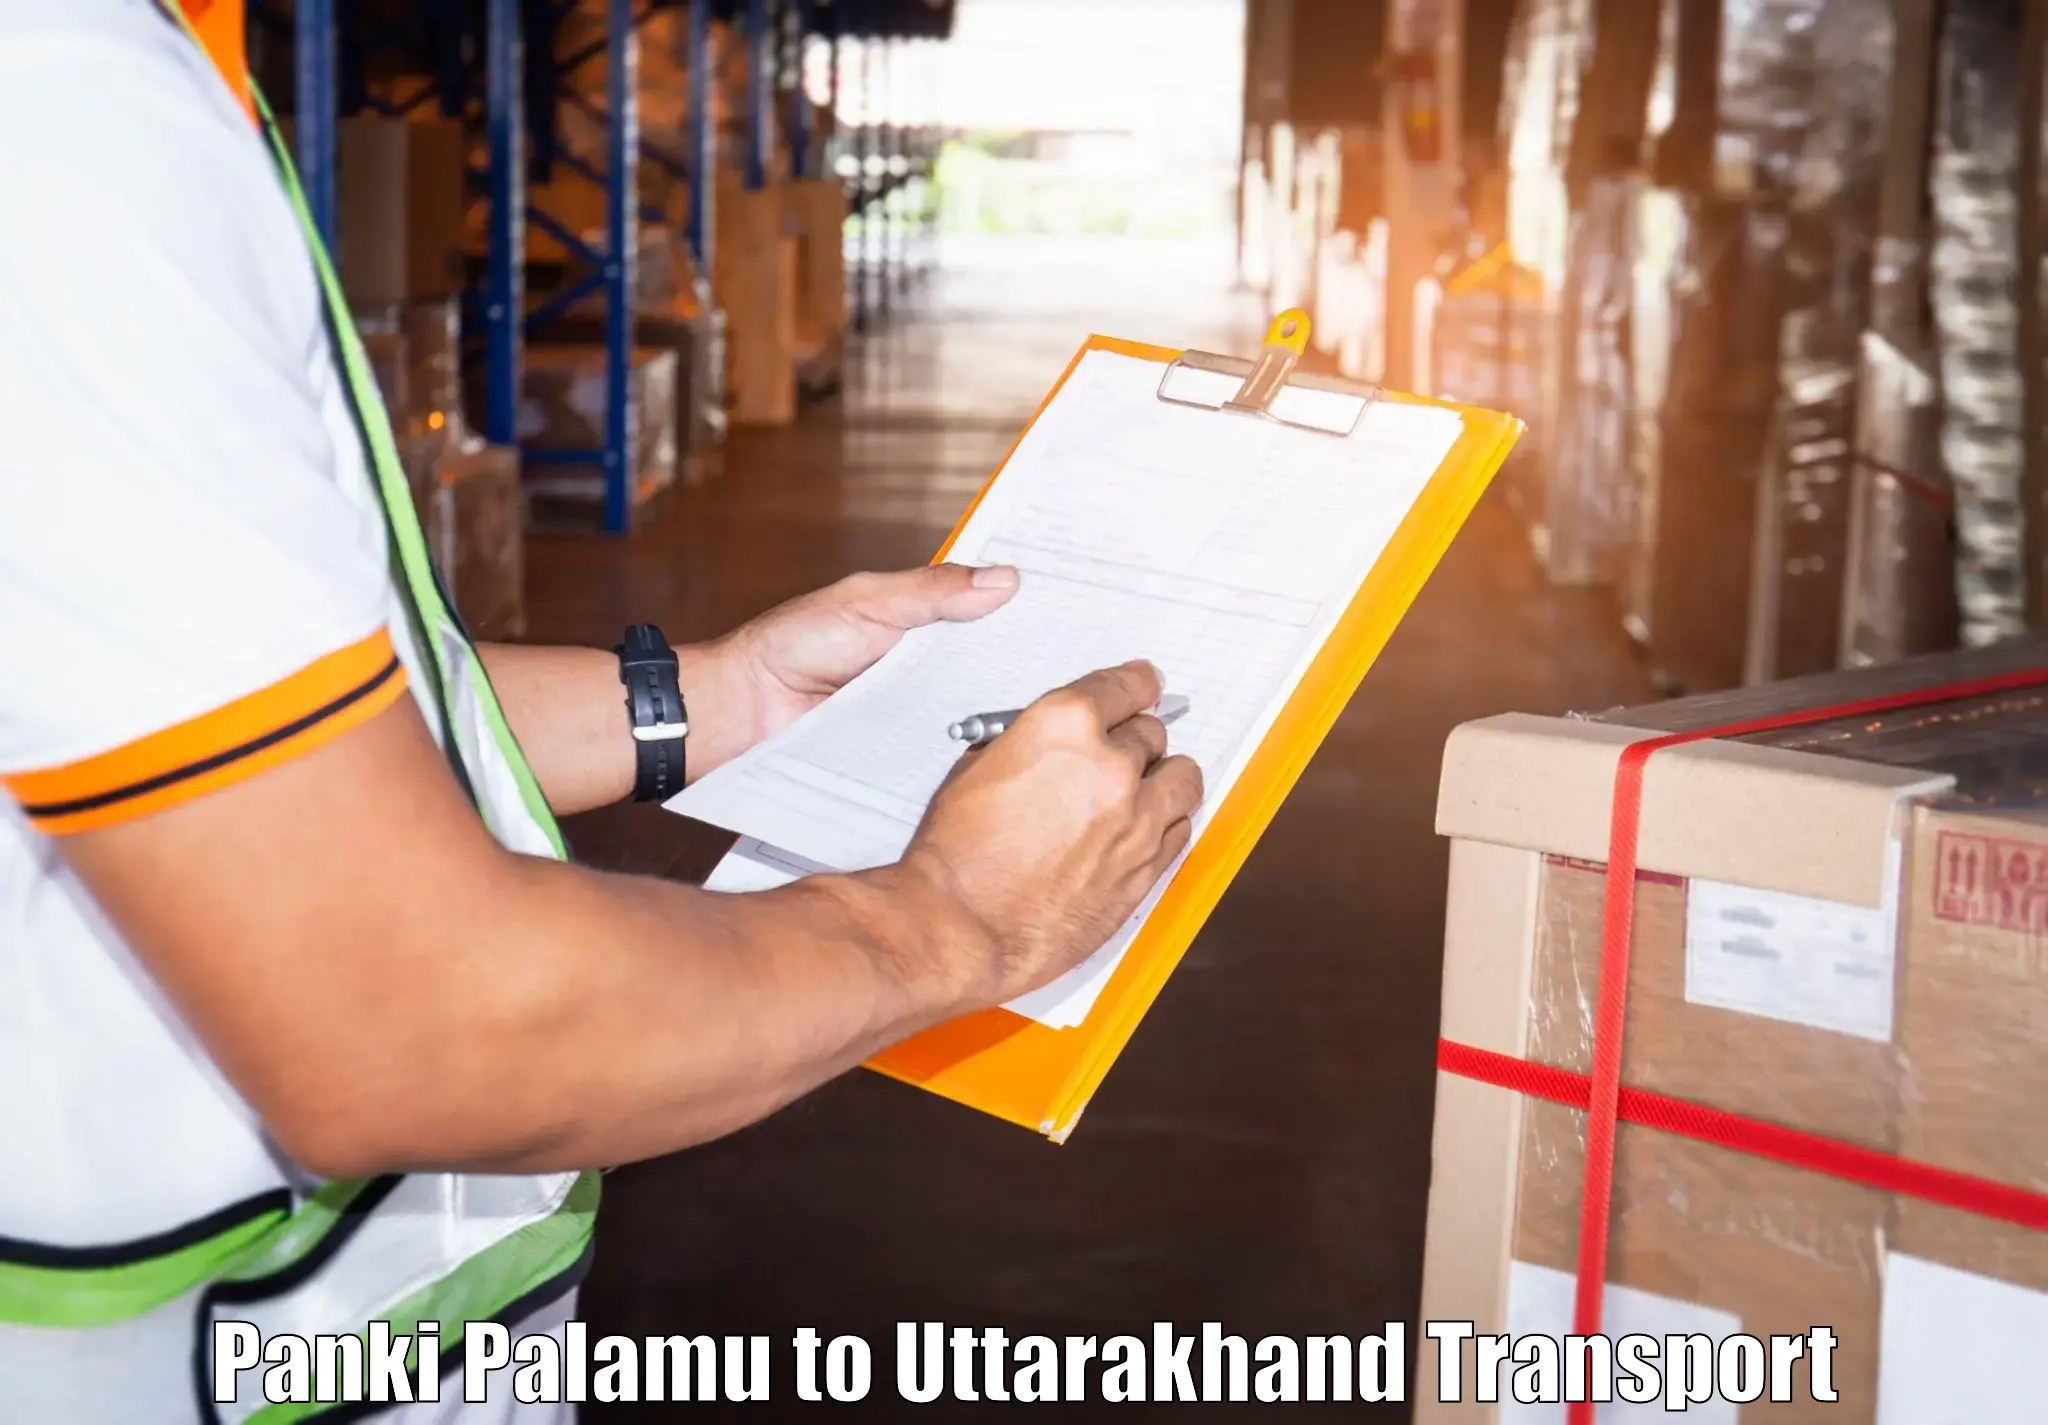 Truck transport companies in India Panki Palamu to Ranikhet